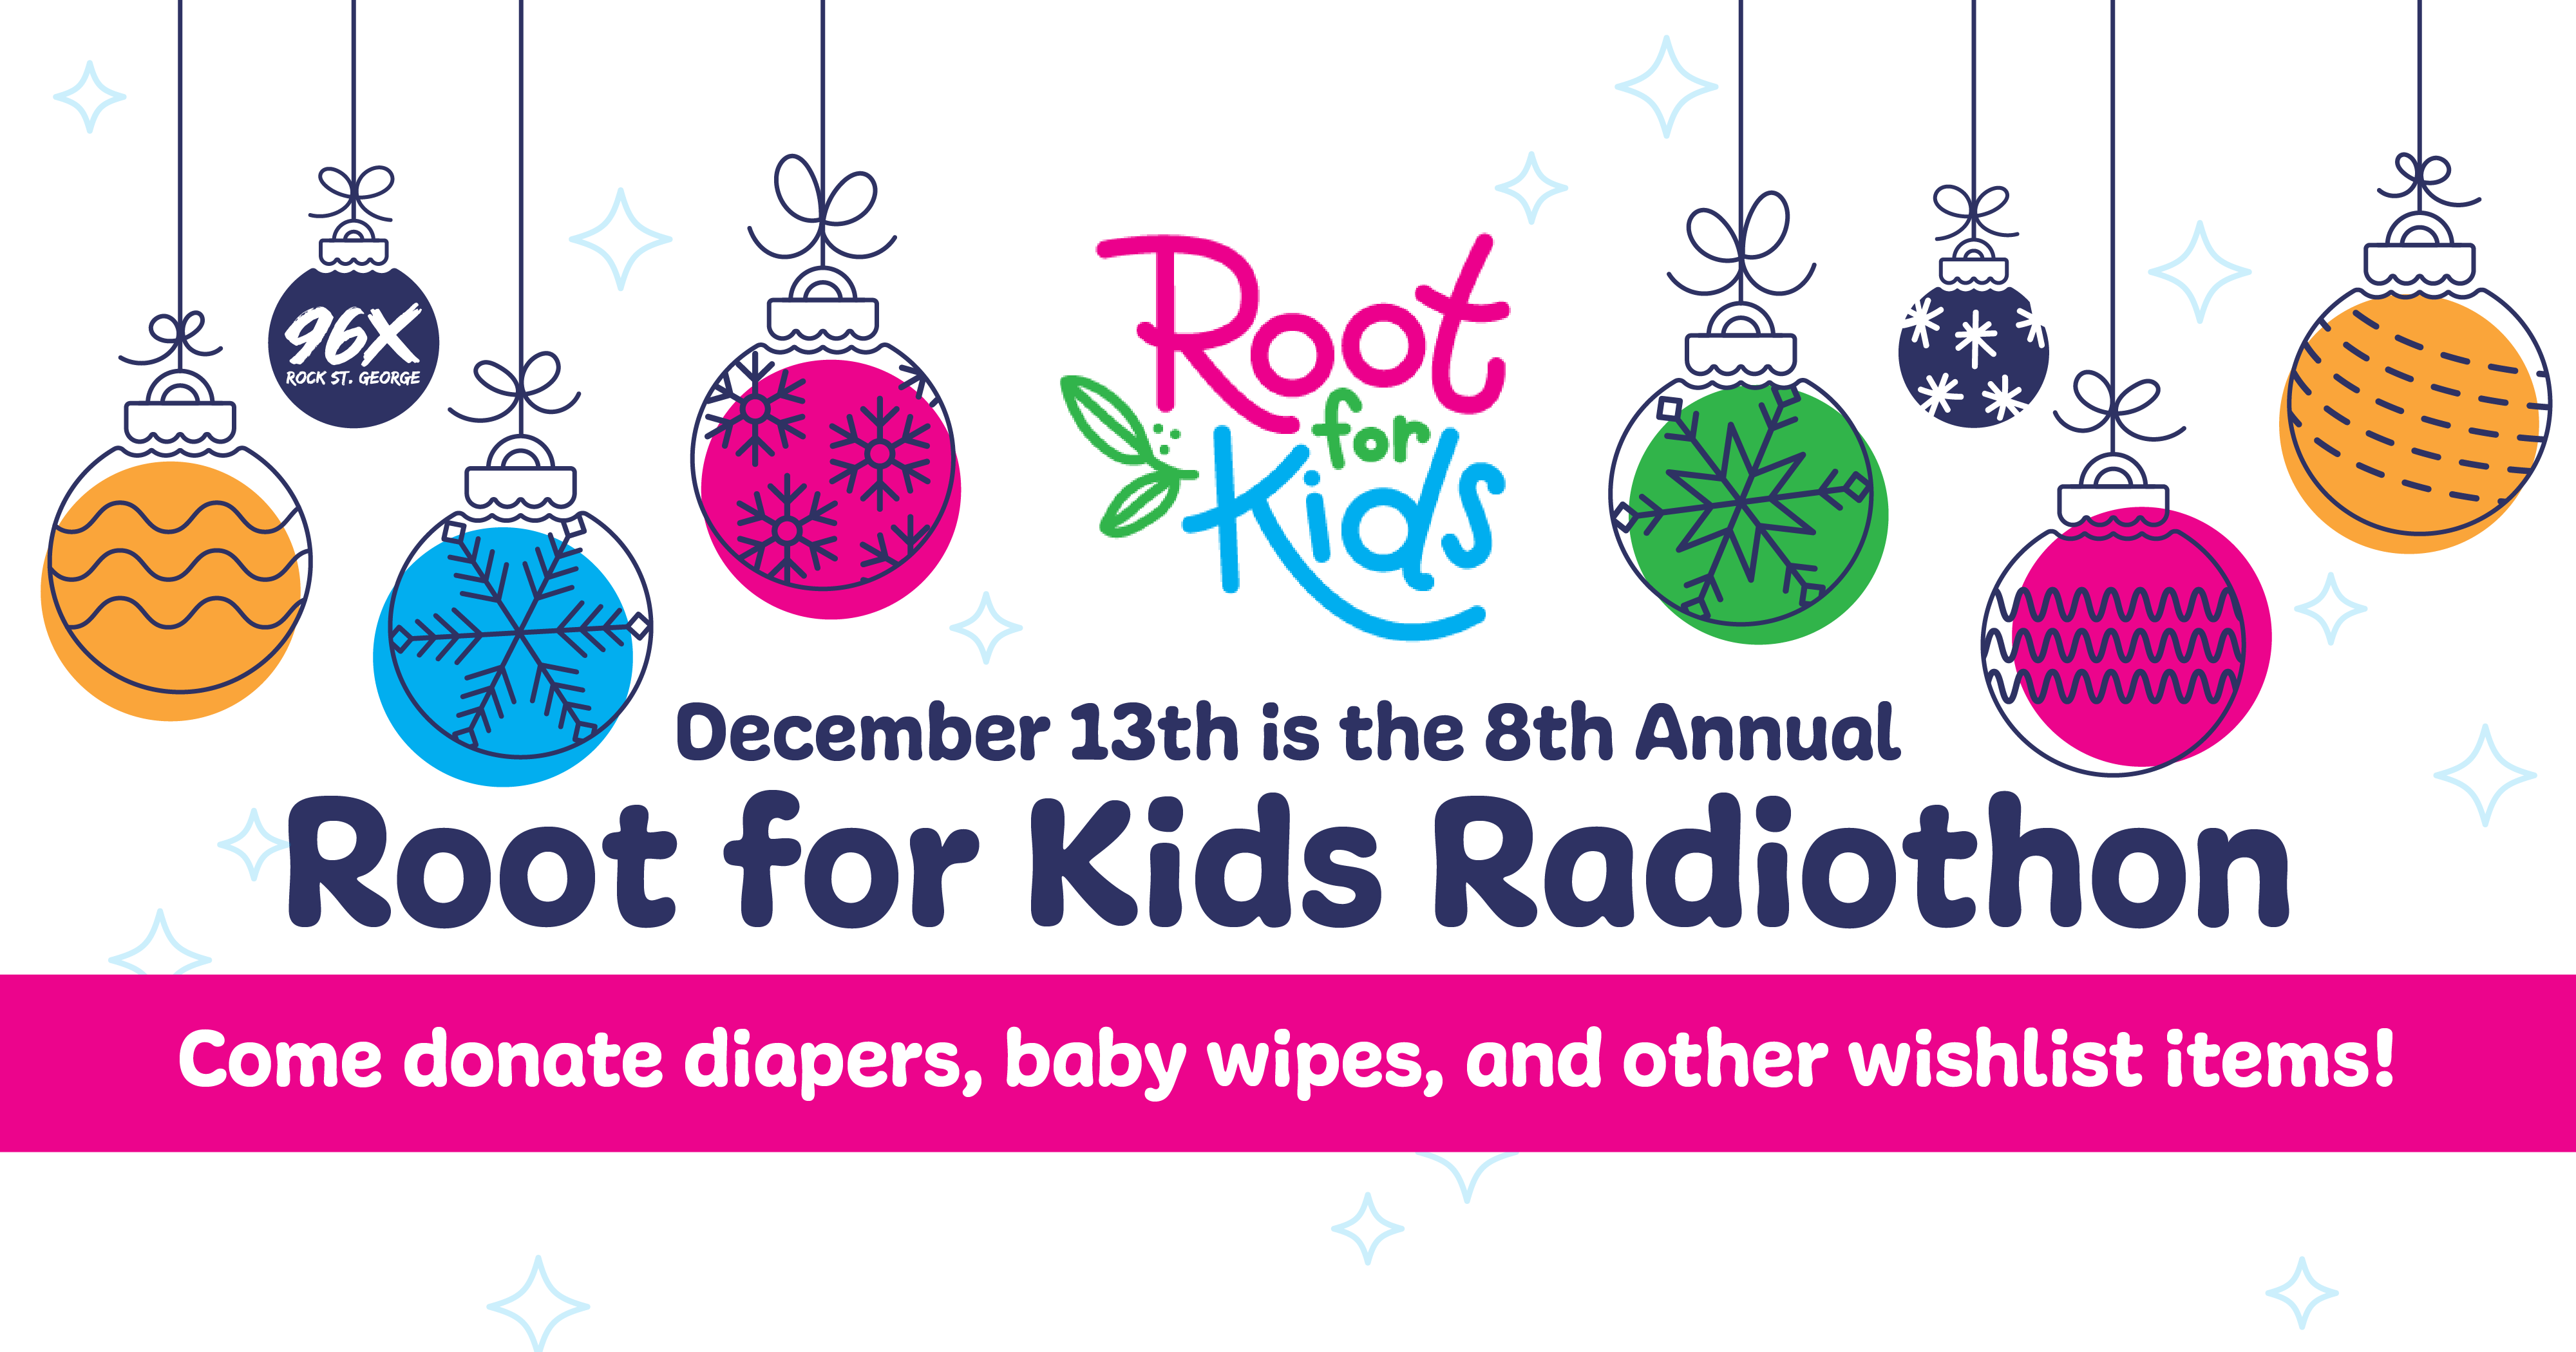 96X Root for Kids Radiothon